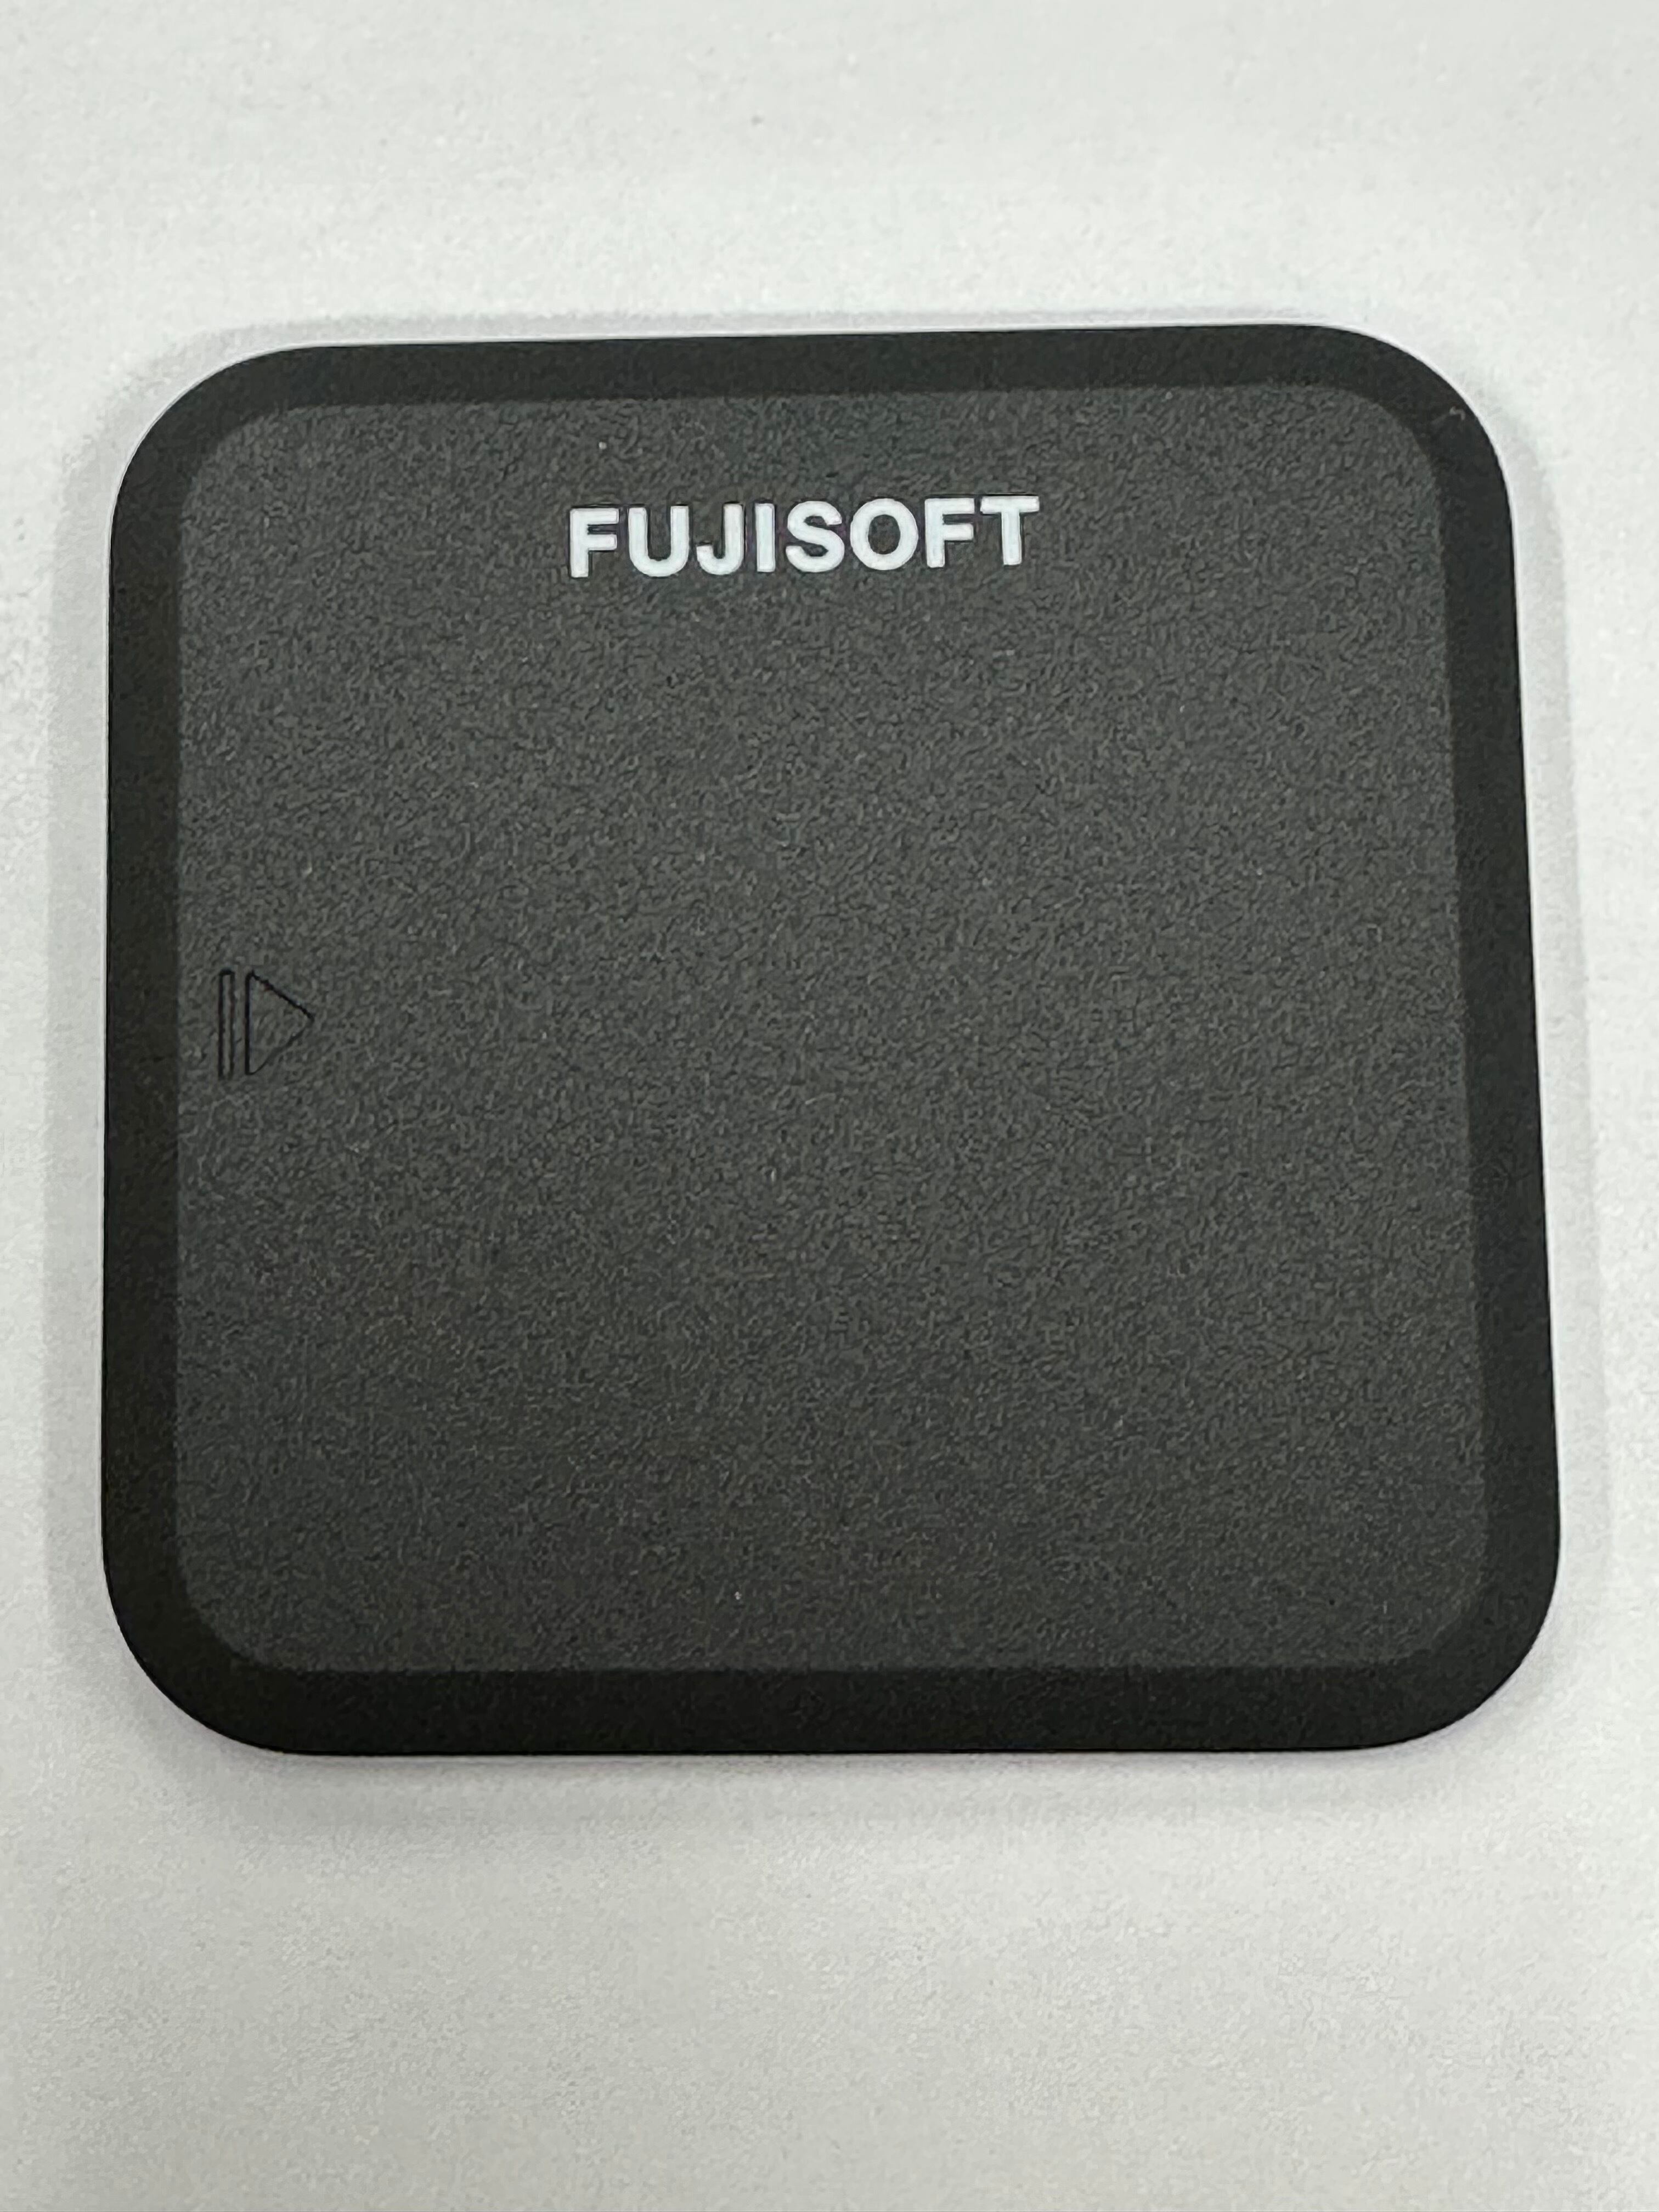 FUJISOFT モバイルルータ FS030W 本体のみ